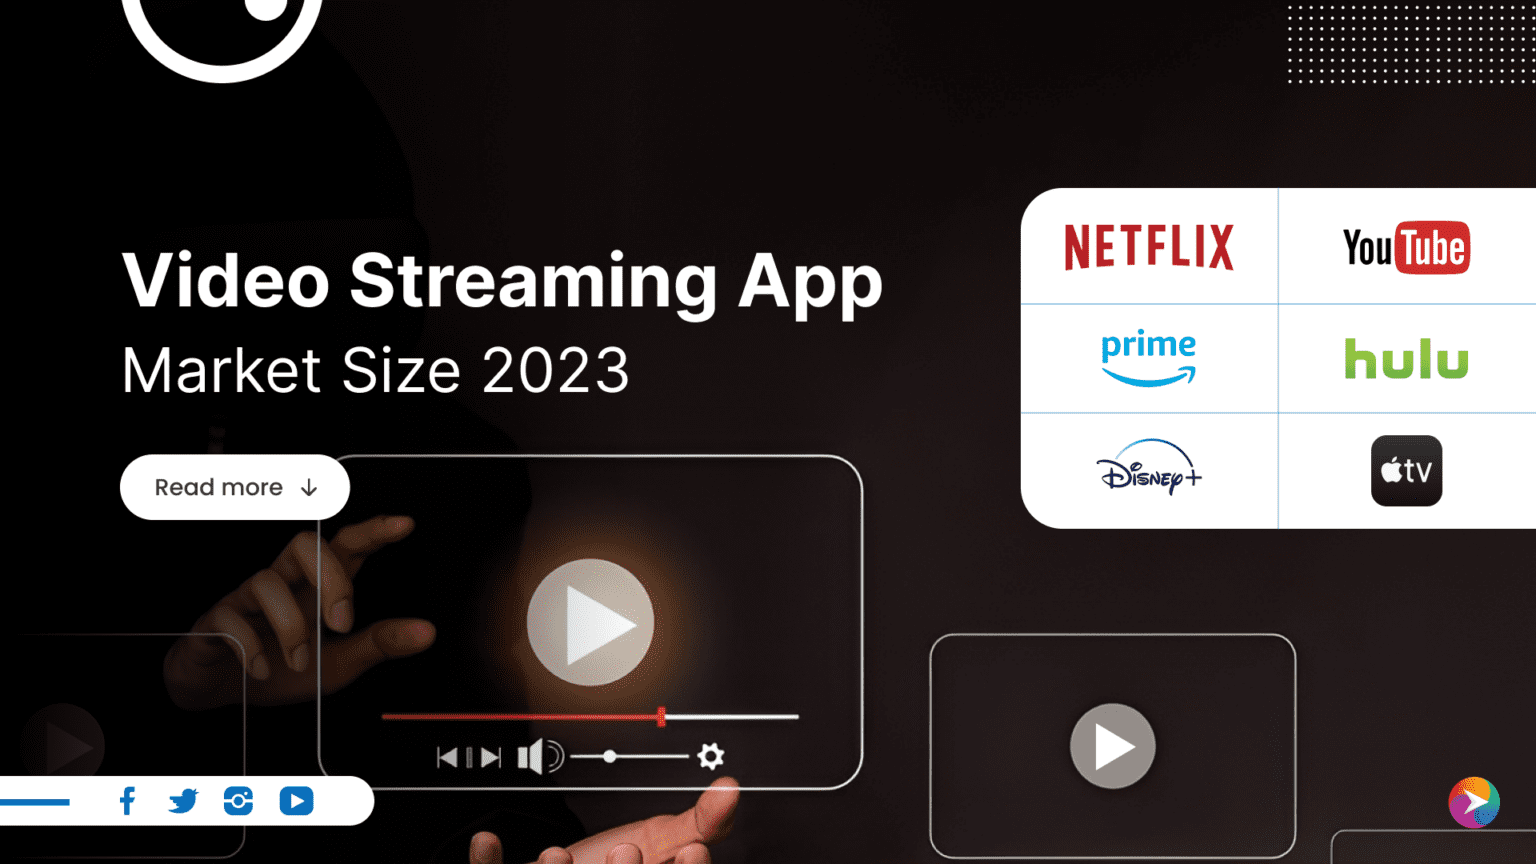 Video Streaming App Market Size 2023